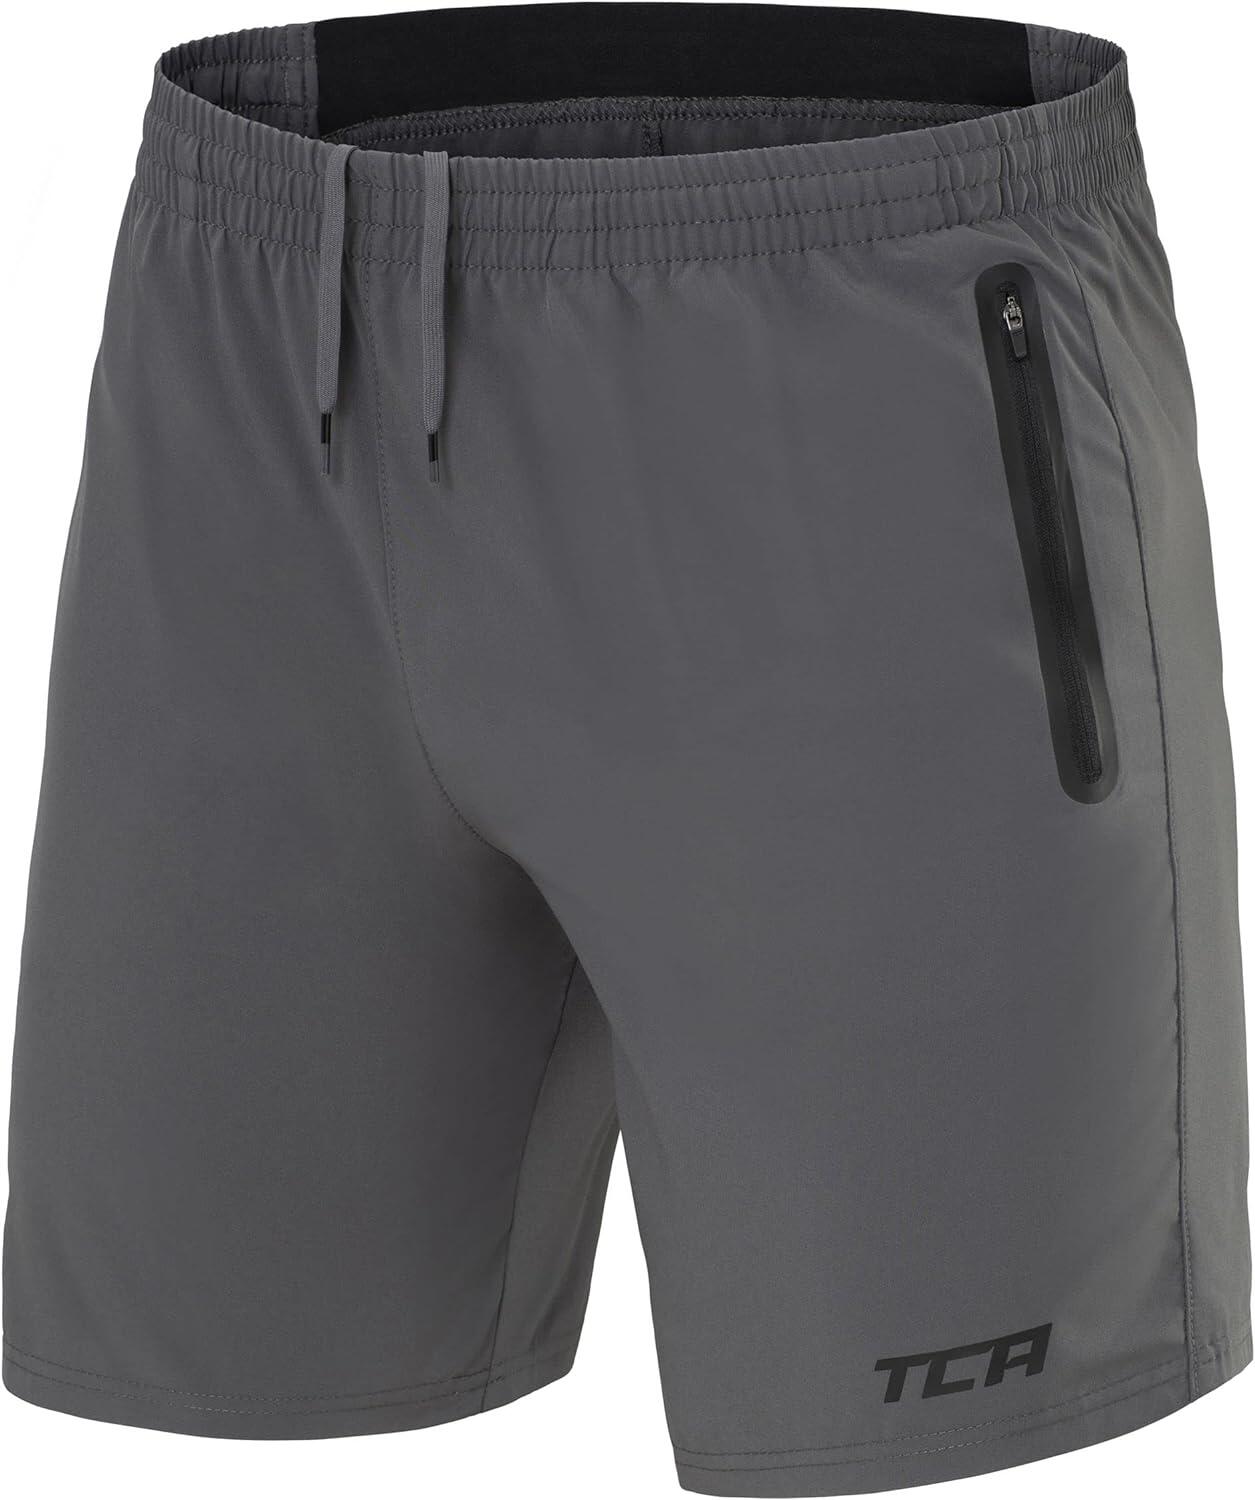 Men's Elite Tech Lightweight Running Shorts with Zip Pockets - Black/Black  TCA